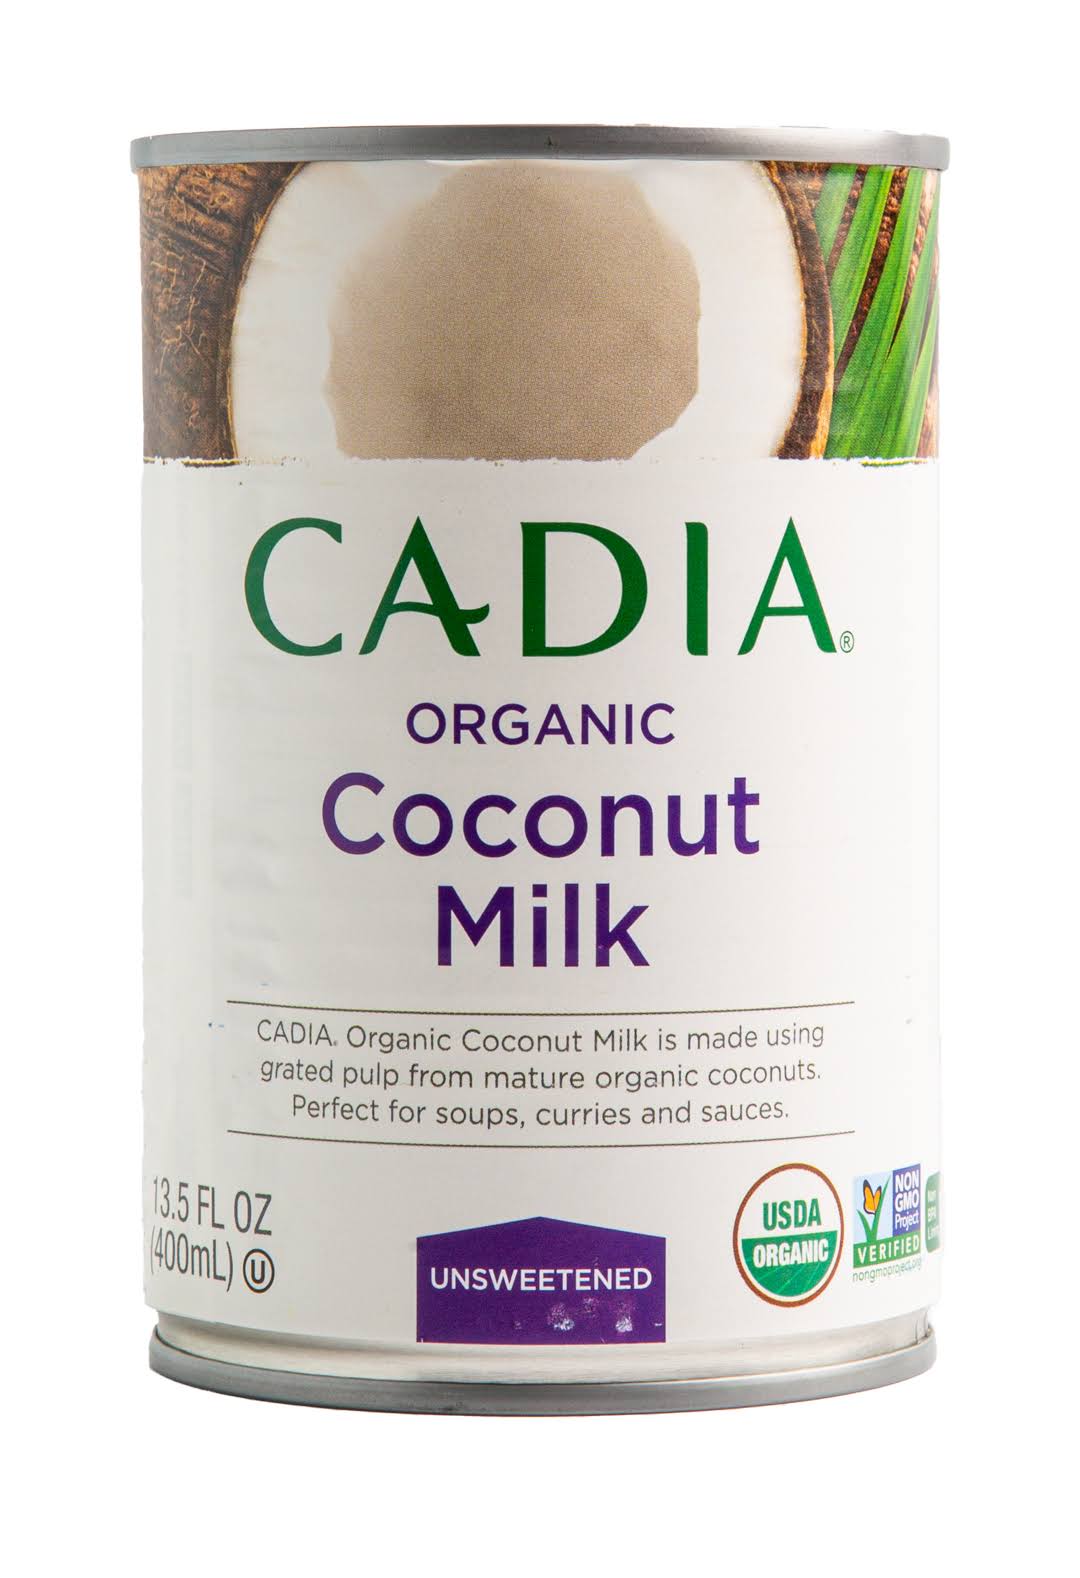 Cadia Coconut Milk, Organic, Unsweetened - 13.5 fl oz